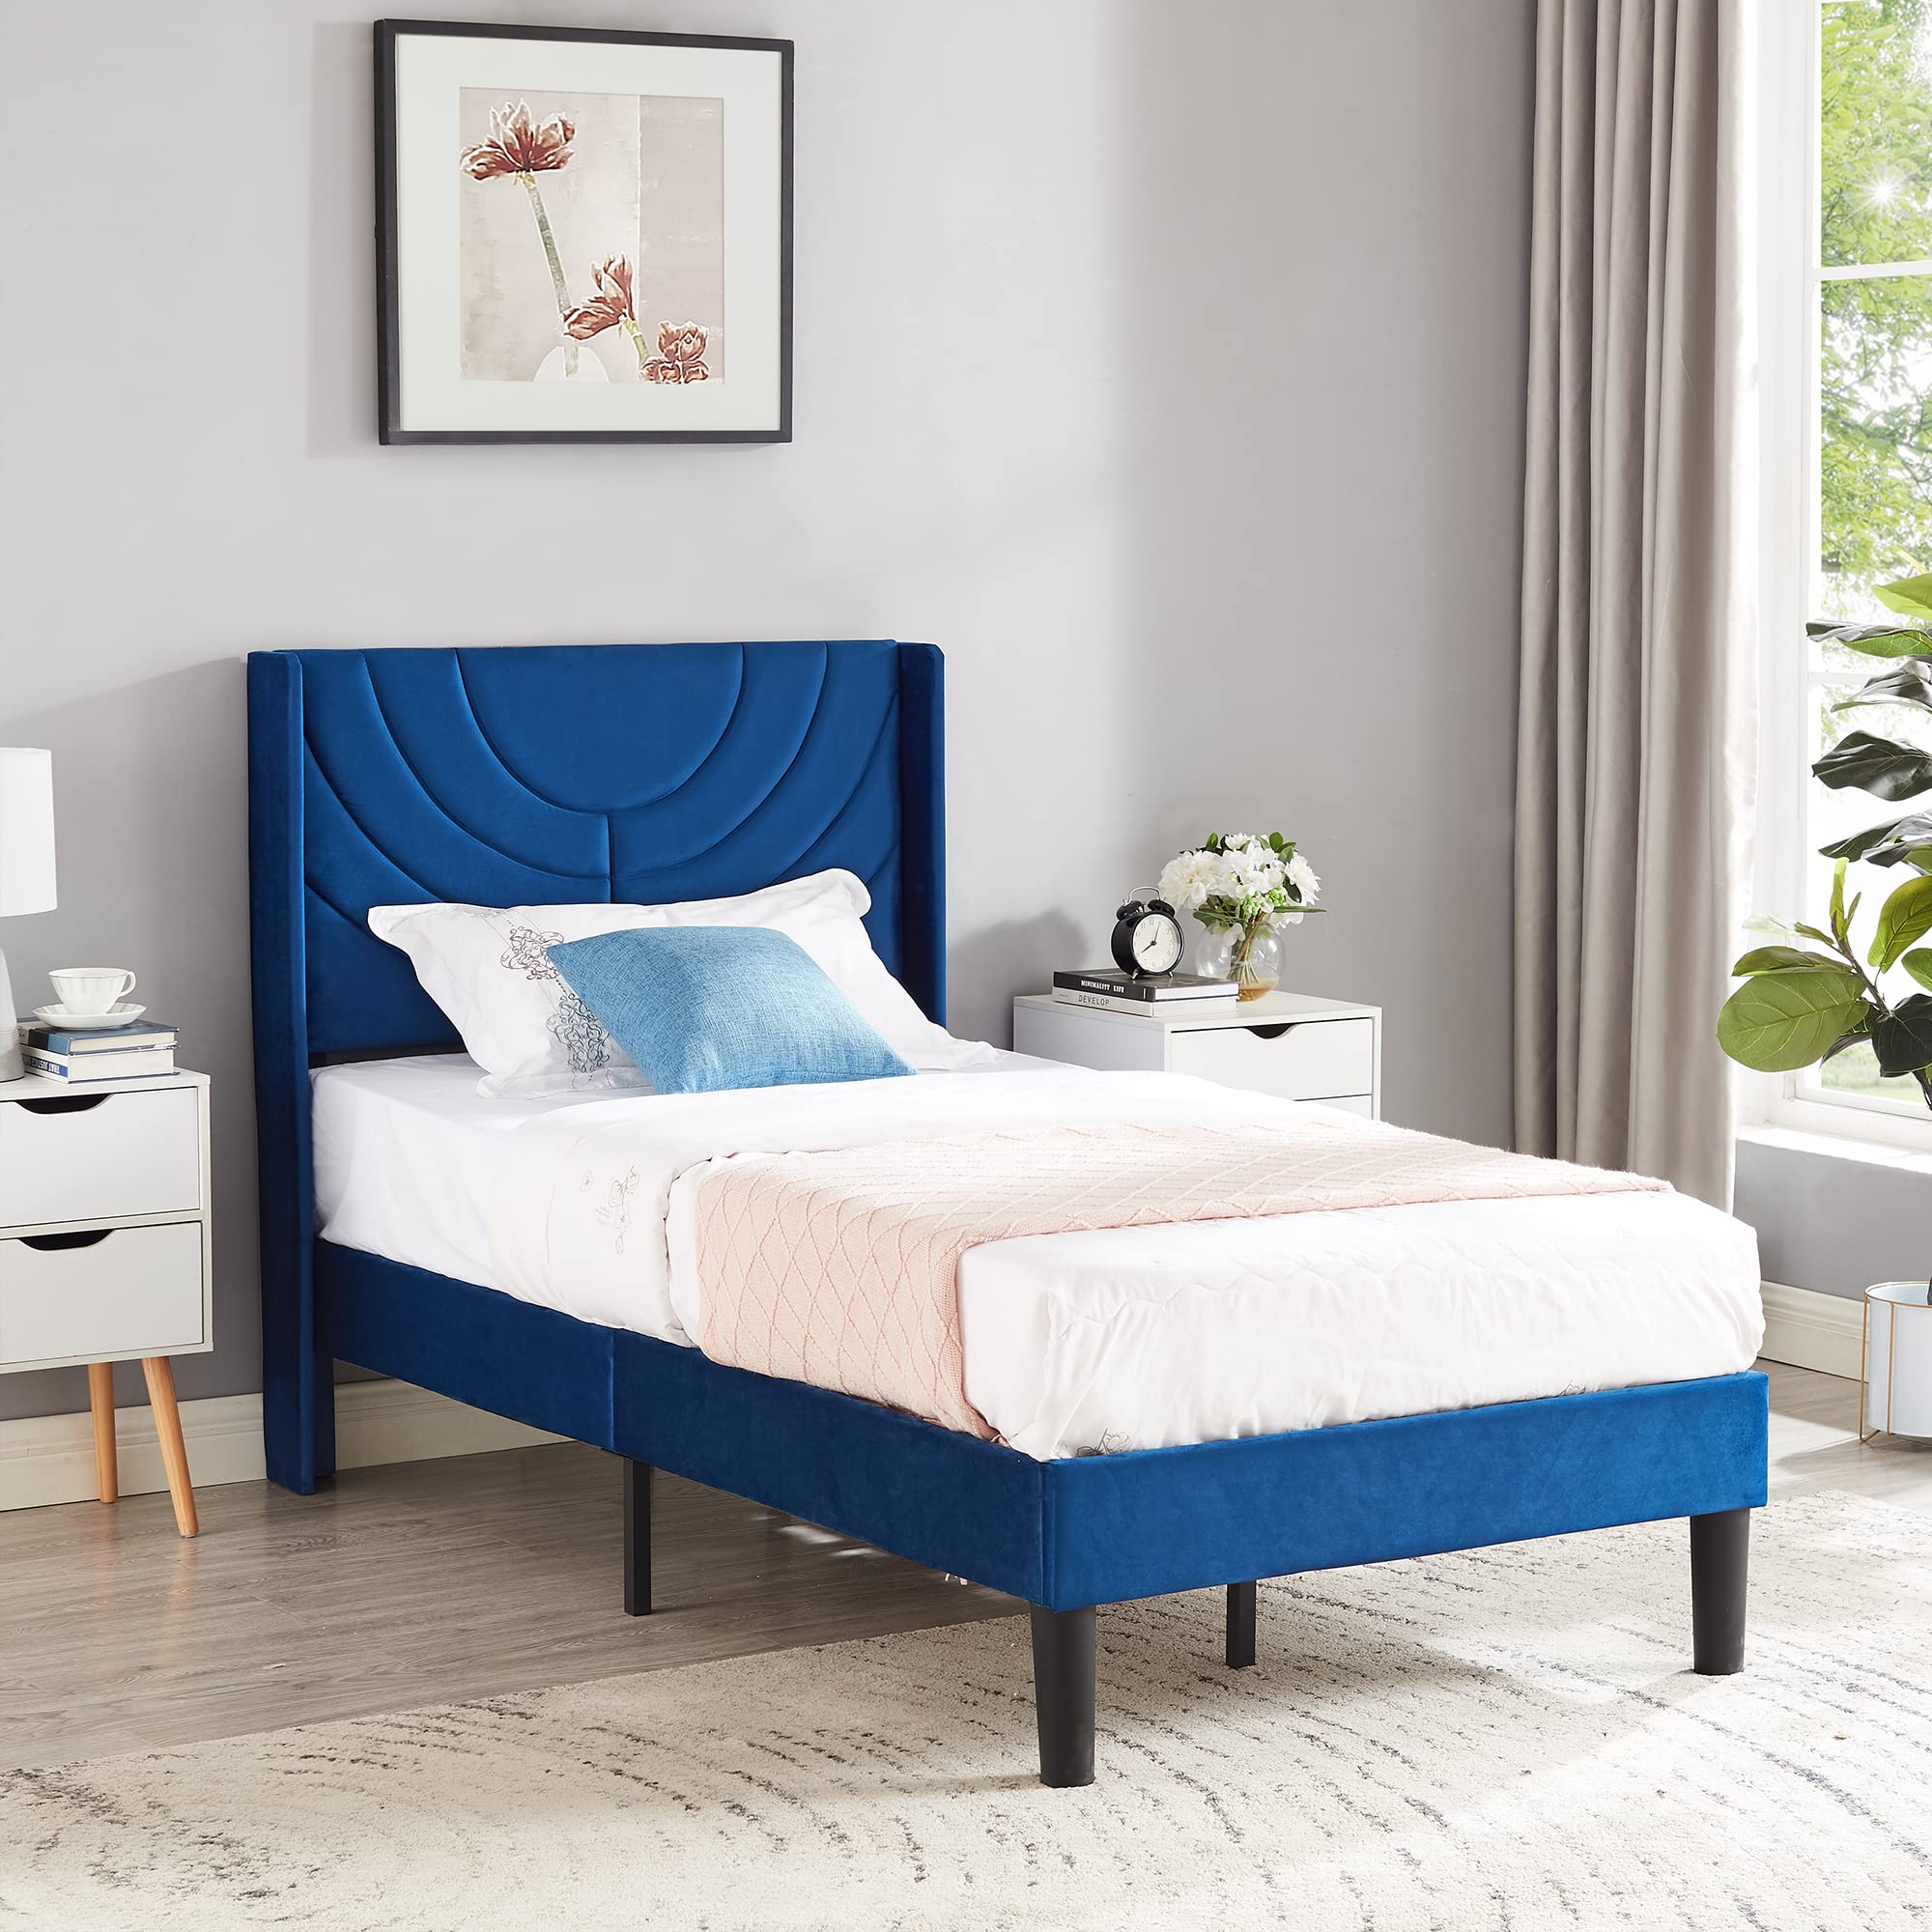 VEcELO Twin Size Upholstered Platform Bed Frame with Adjustable Fabric Headboard,Wooden Slats SupportNo Box Spring NeededMattres